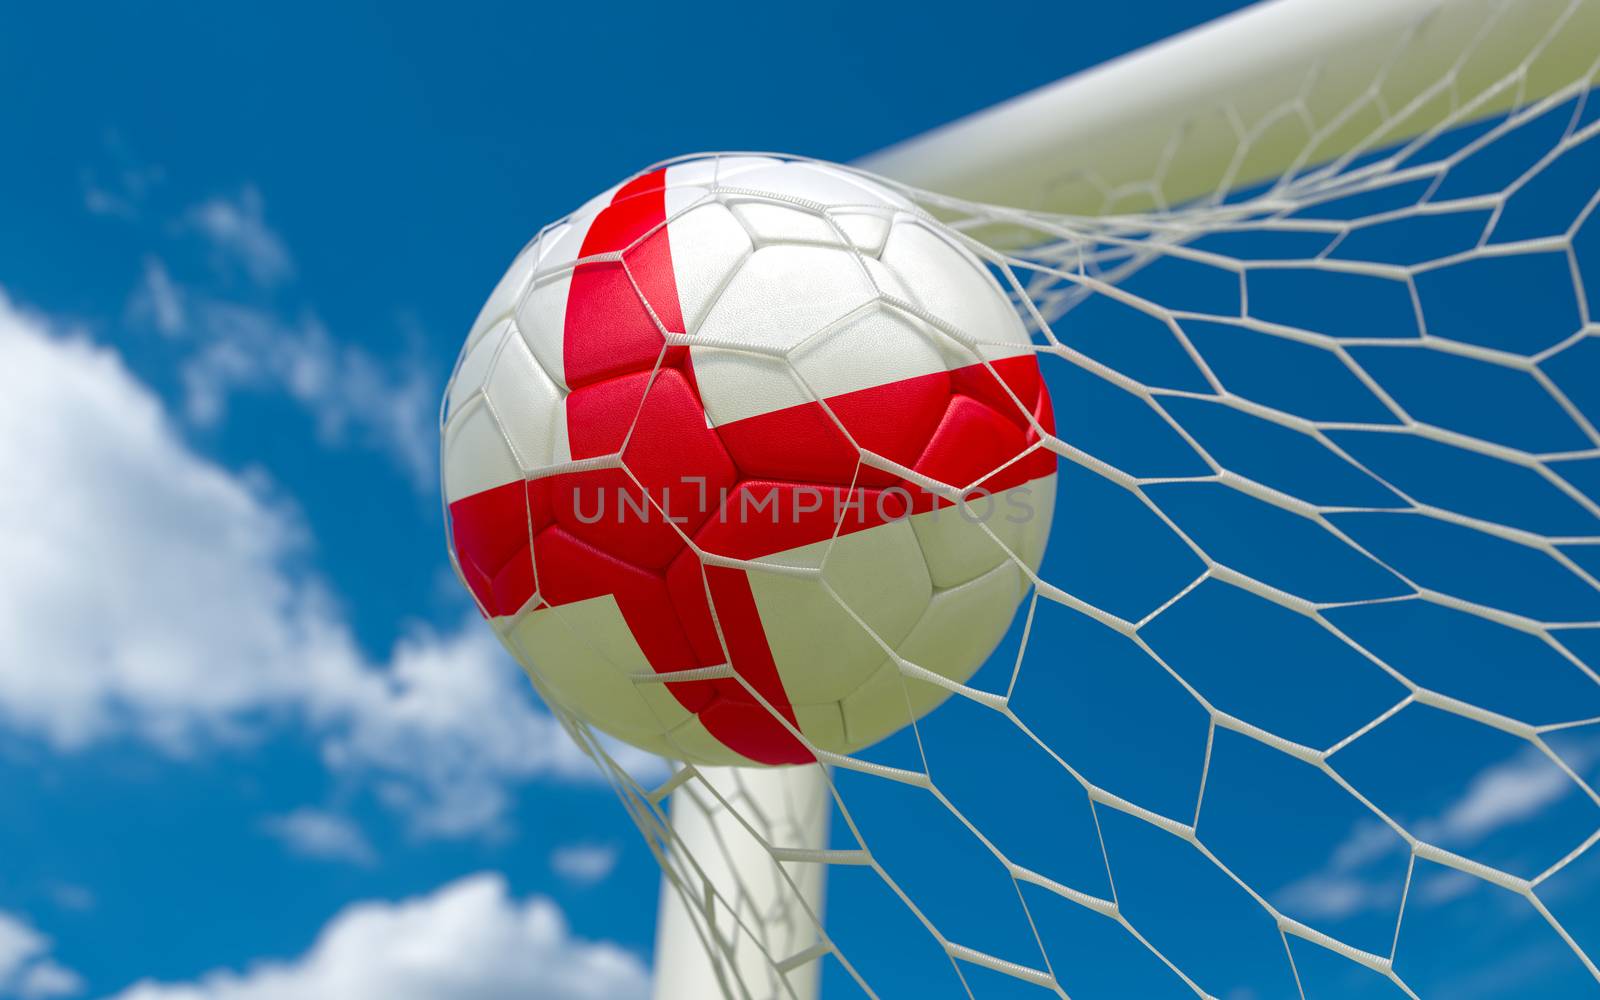 England flag and soccer ball in goal net by Barbraford